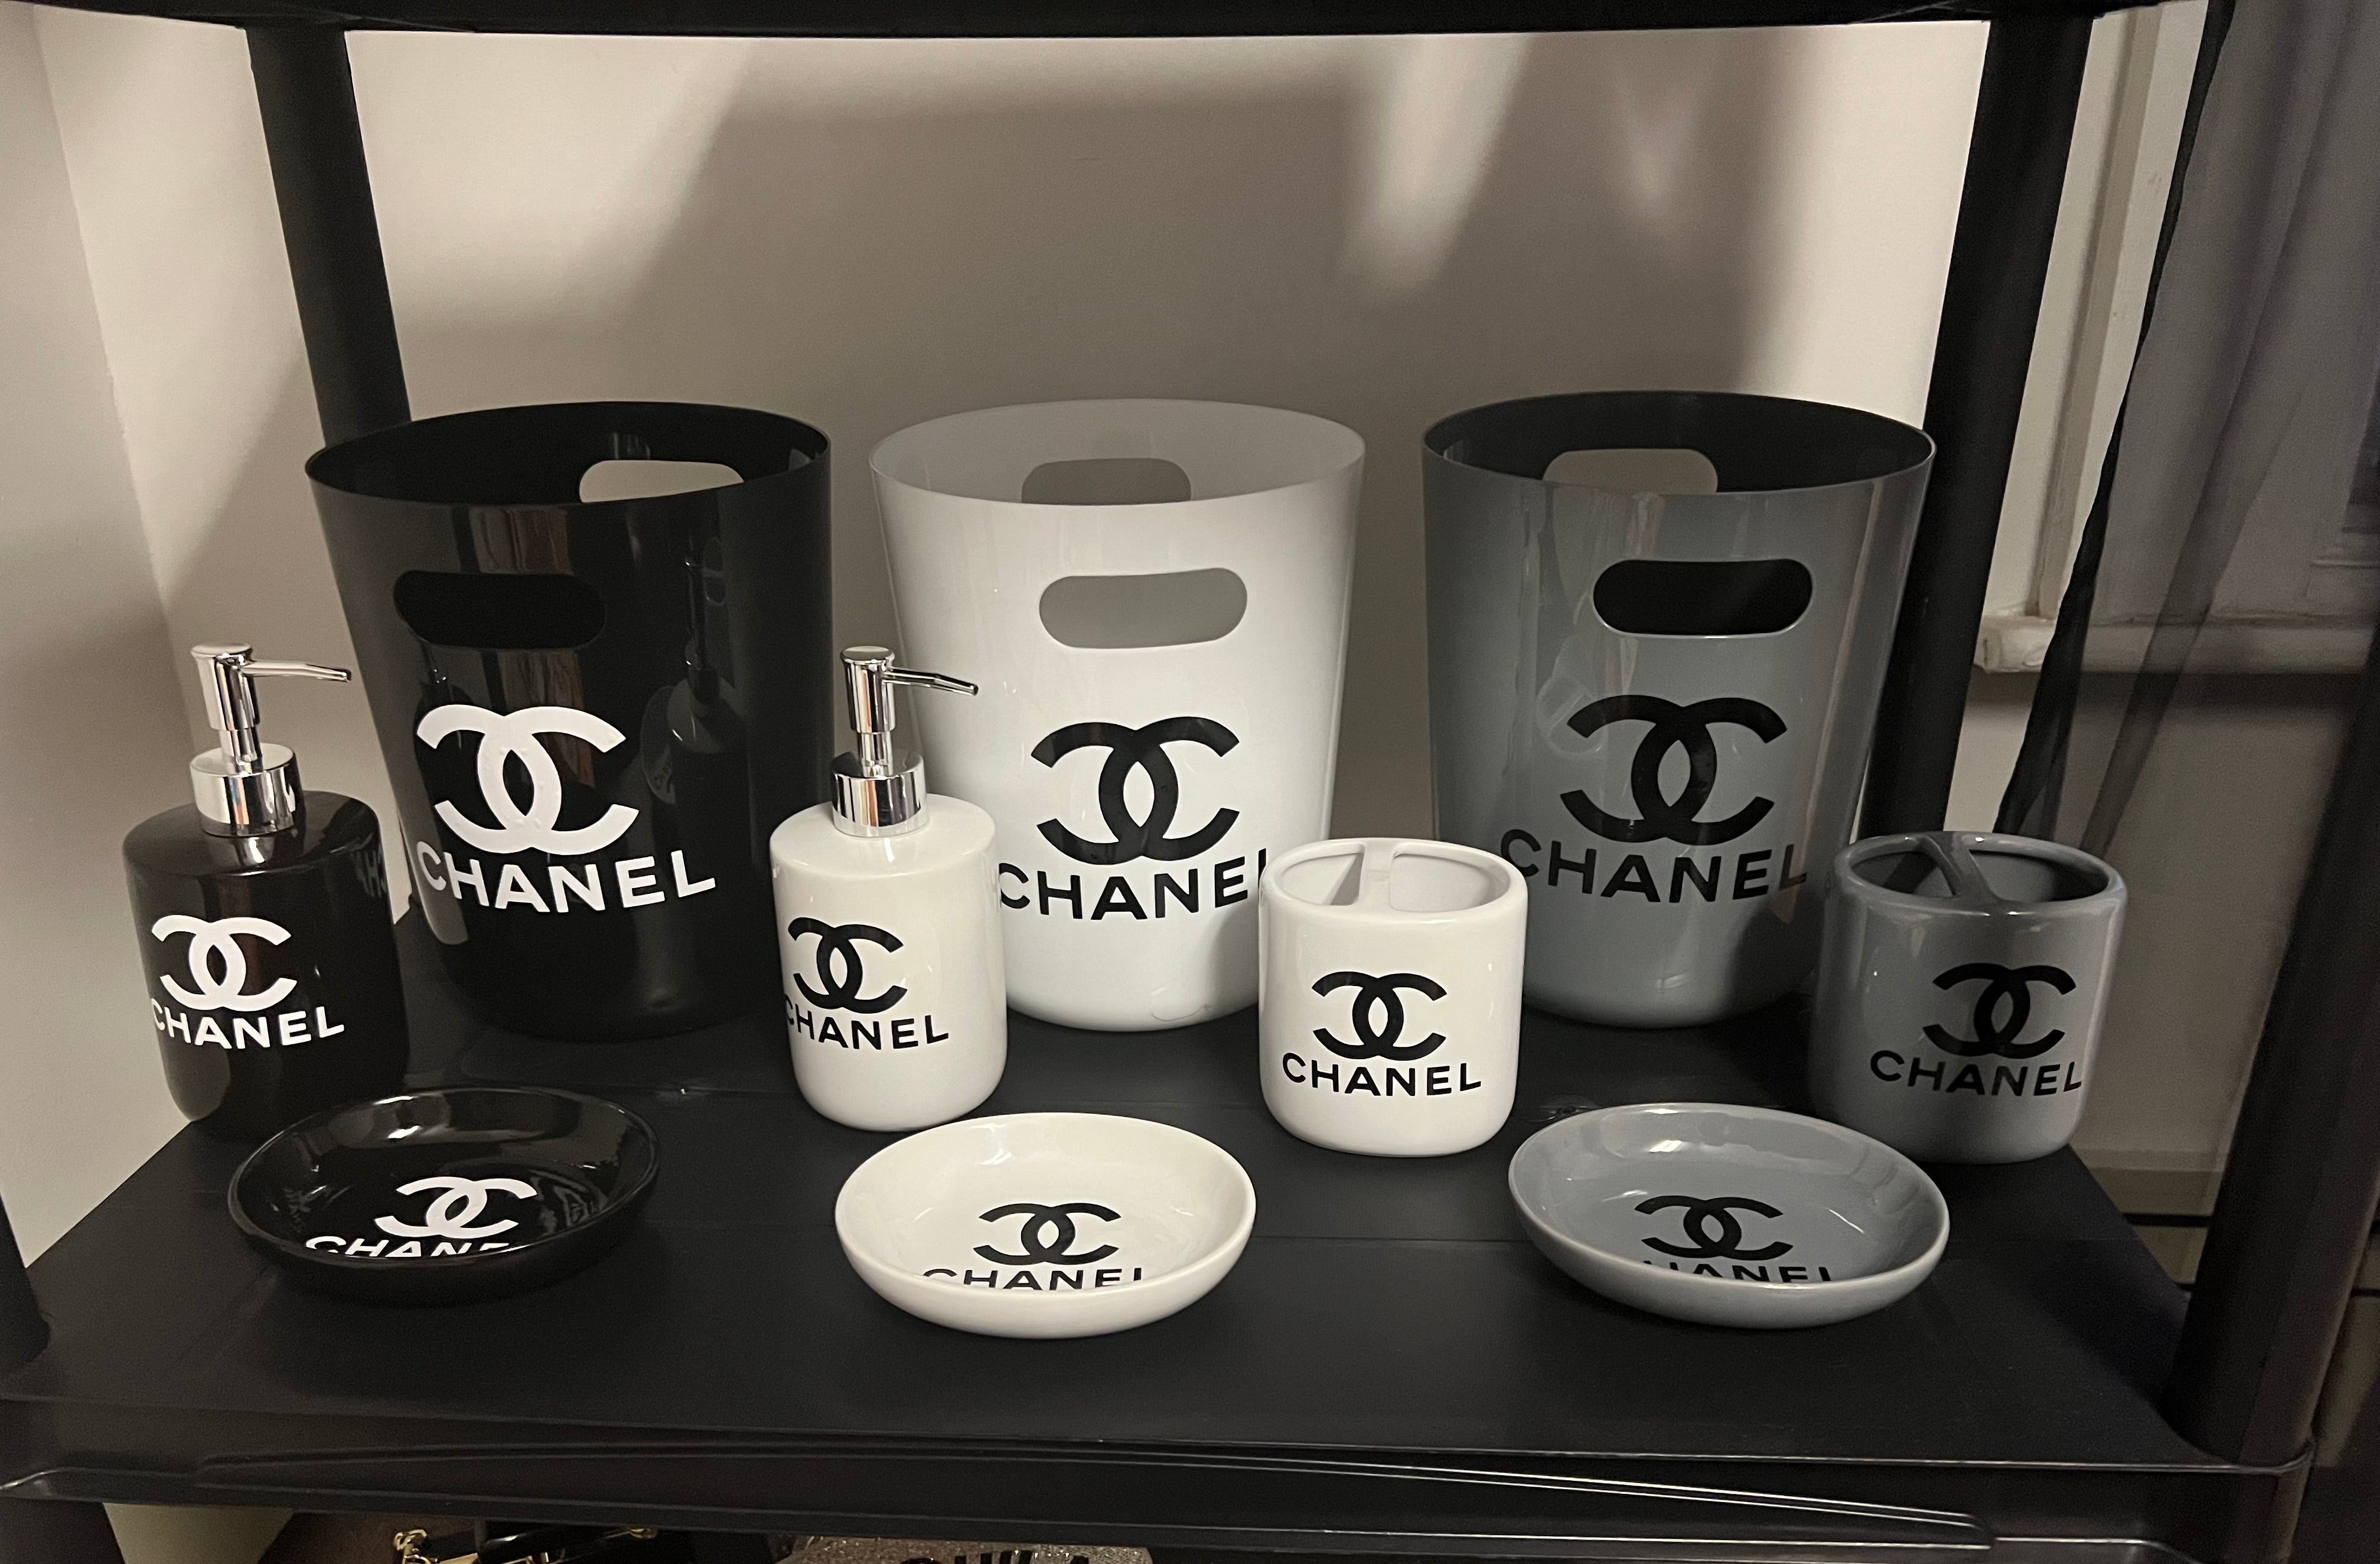 Chanel bathroom sets